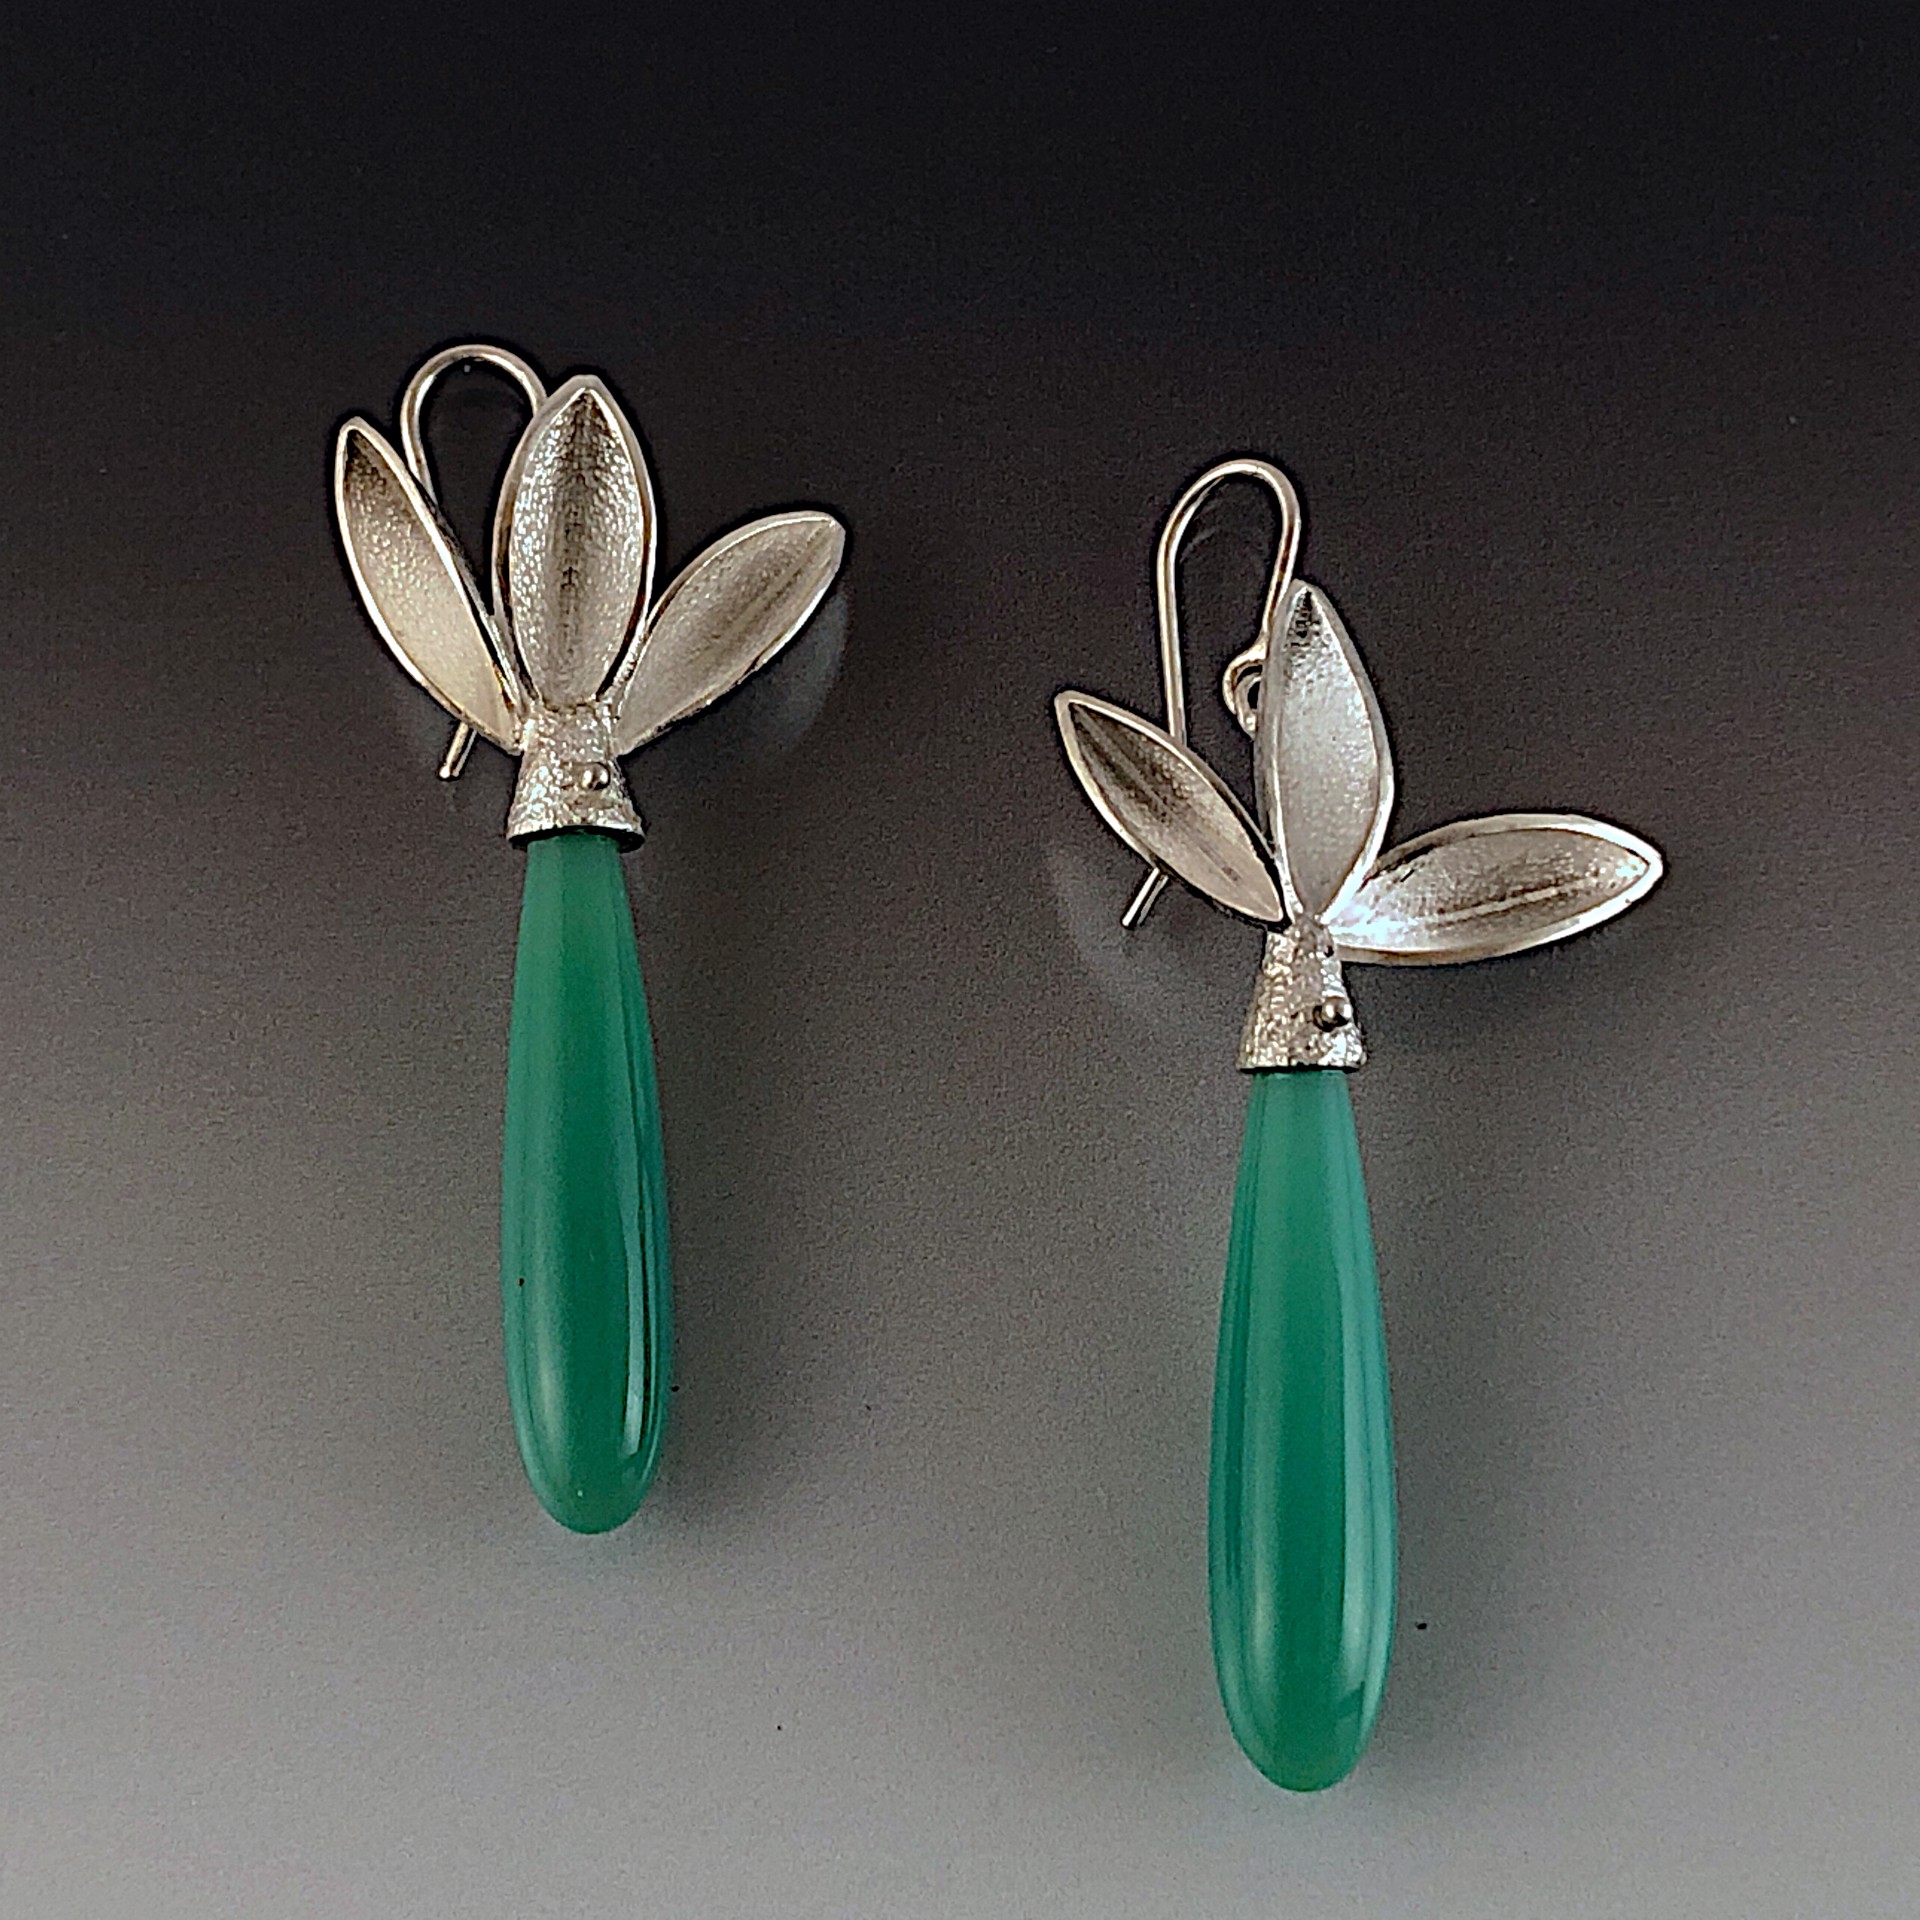 Three Petals Earrings with Chrysoprase by Marie-Helene Rake